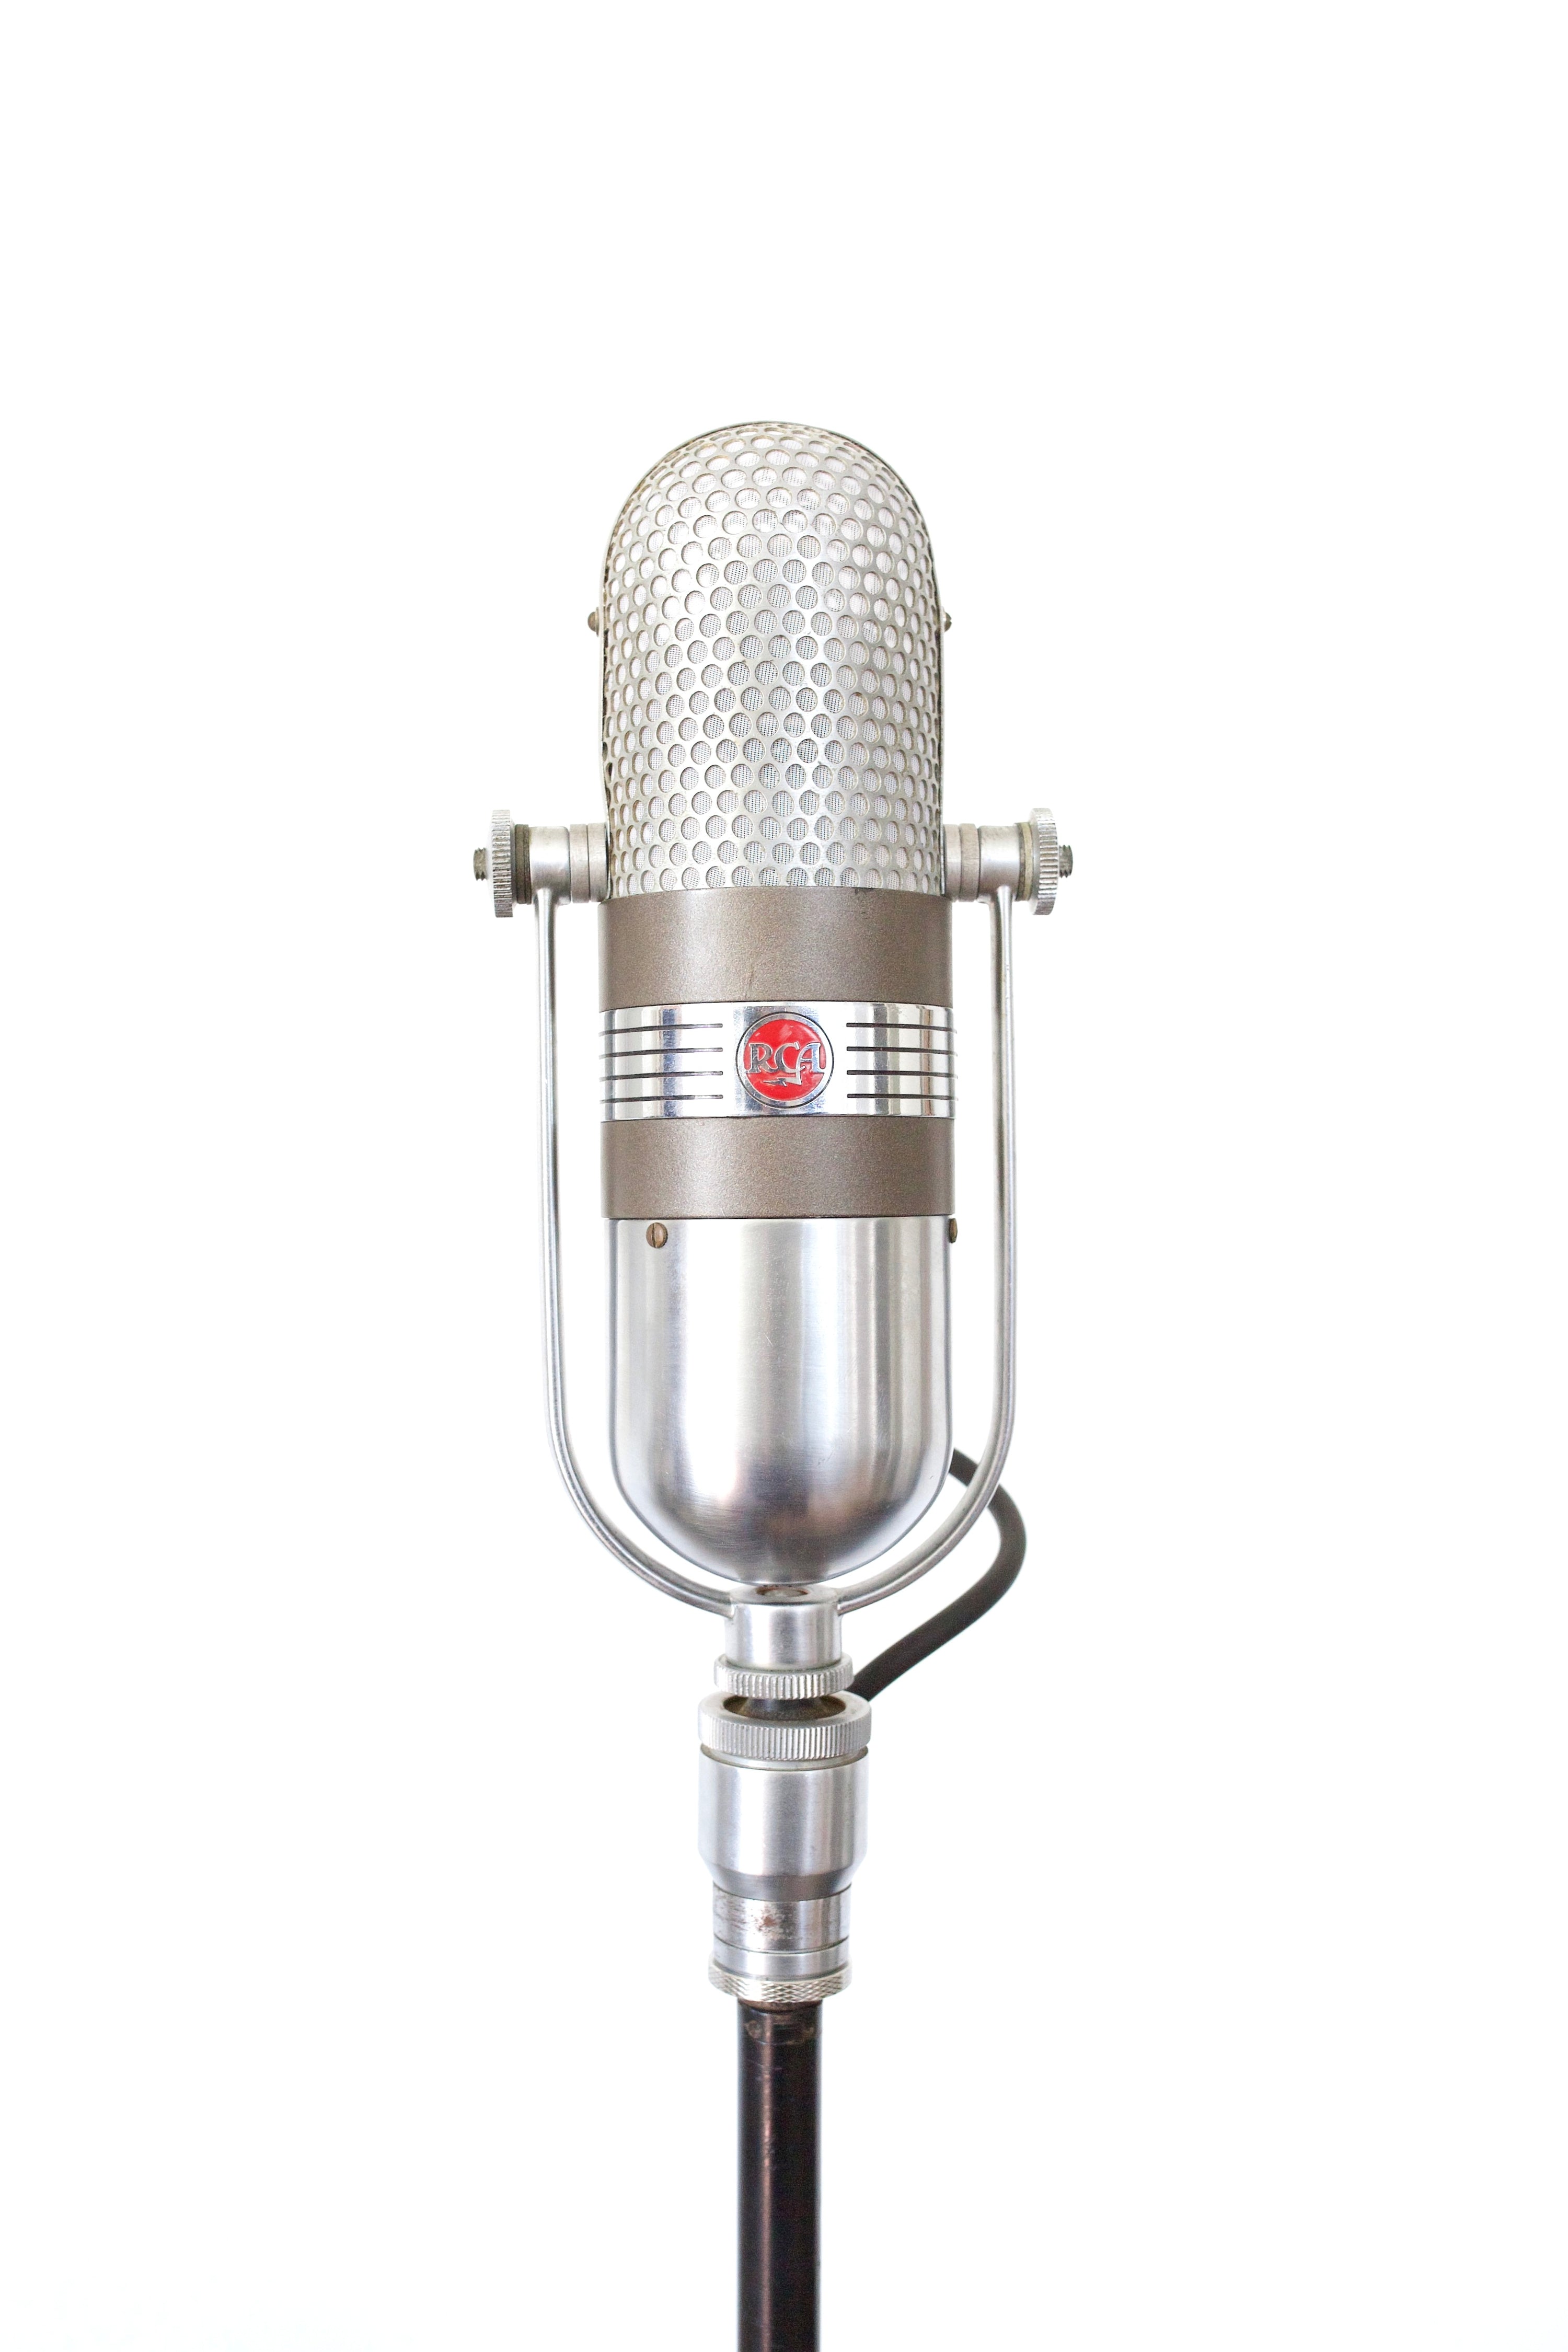 RCA 77-D Ribbon Microphone